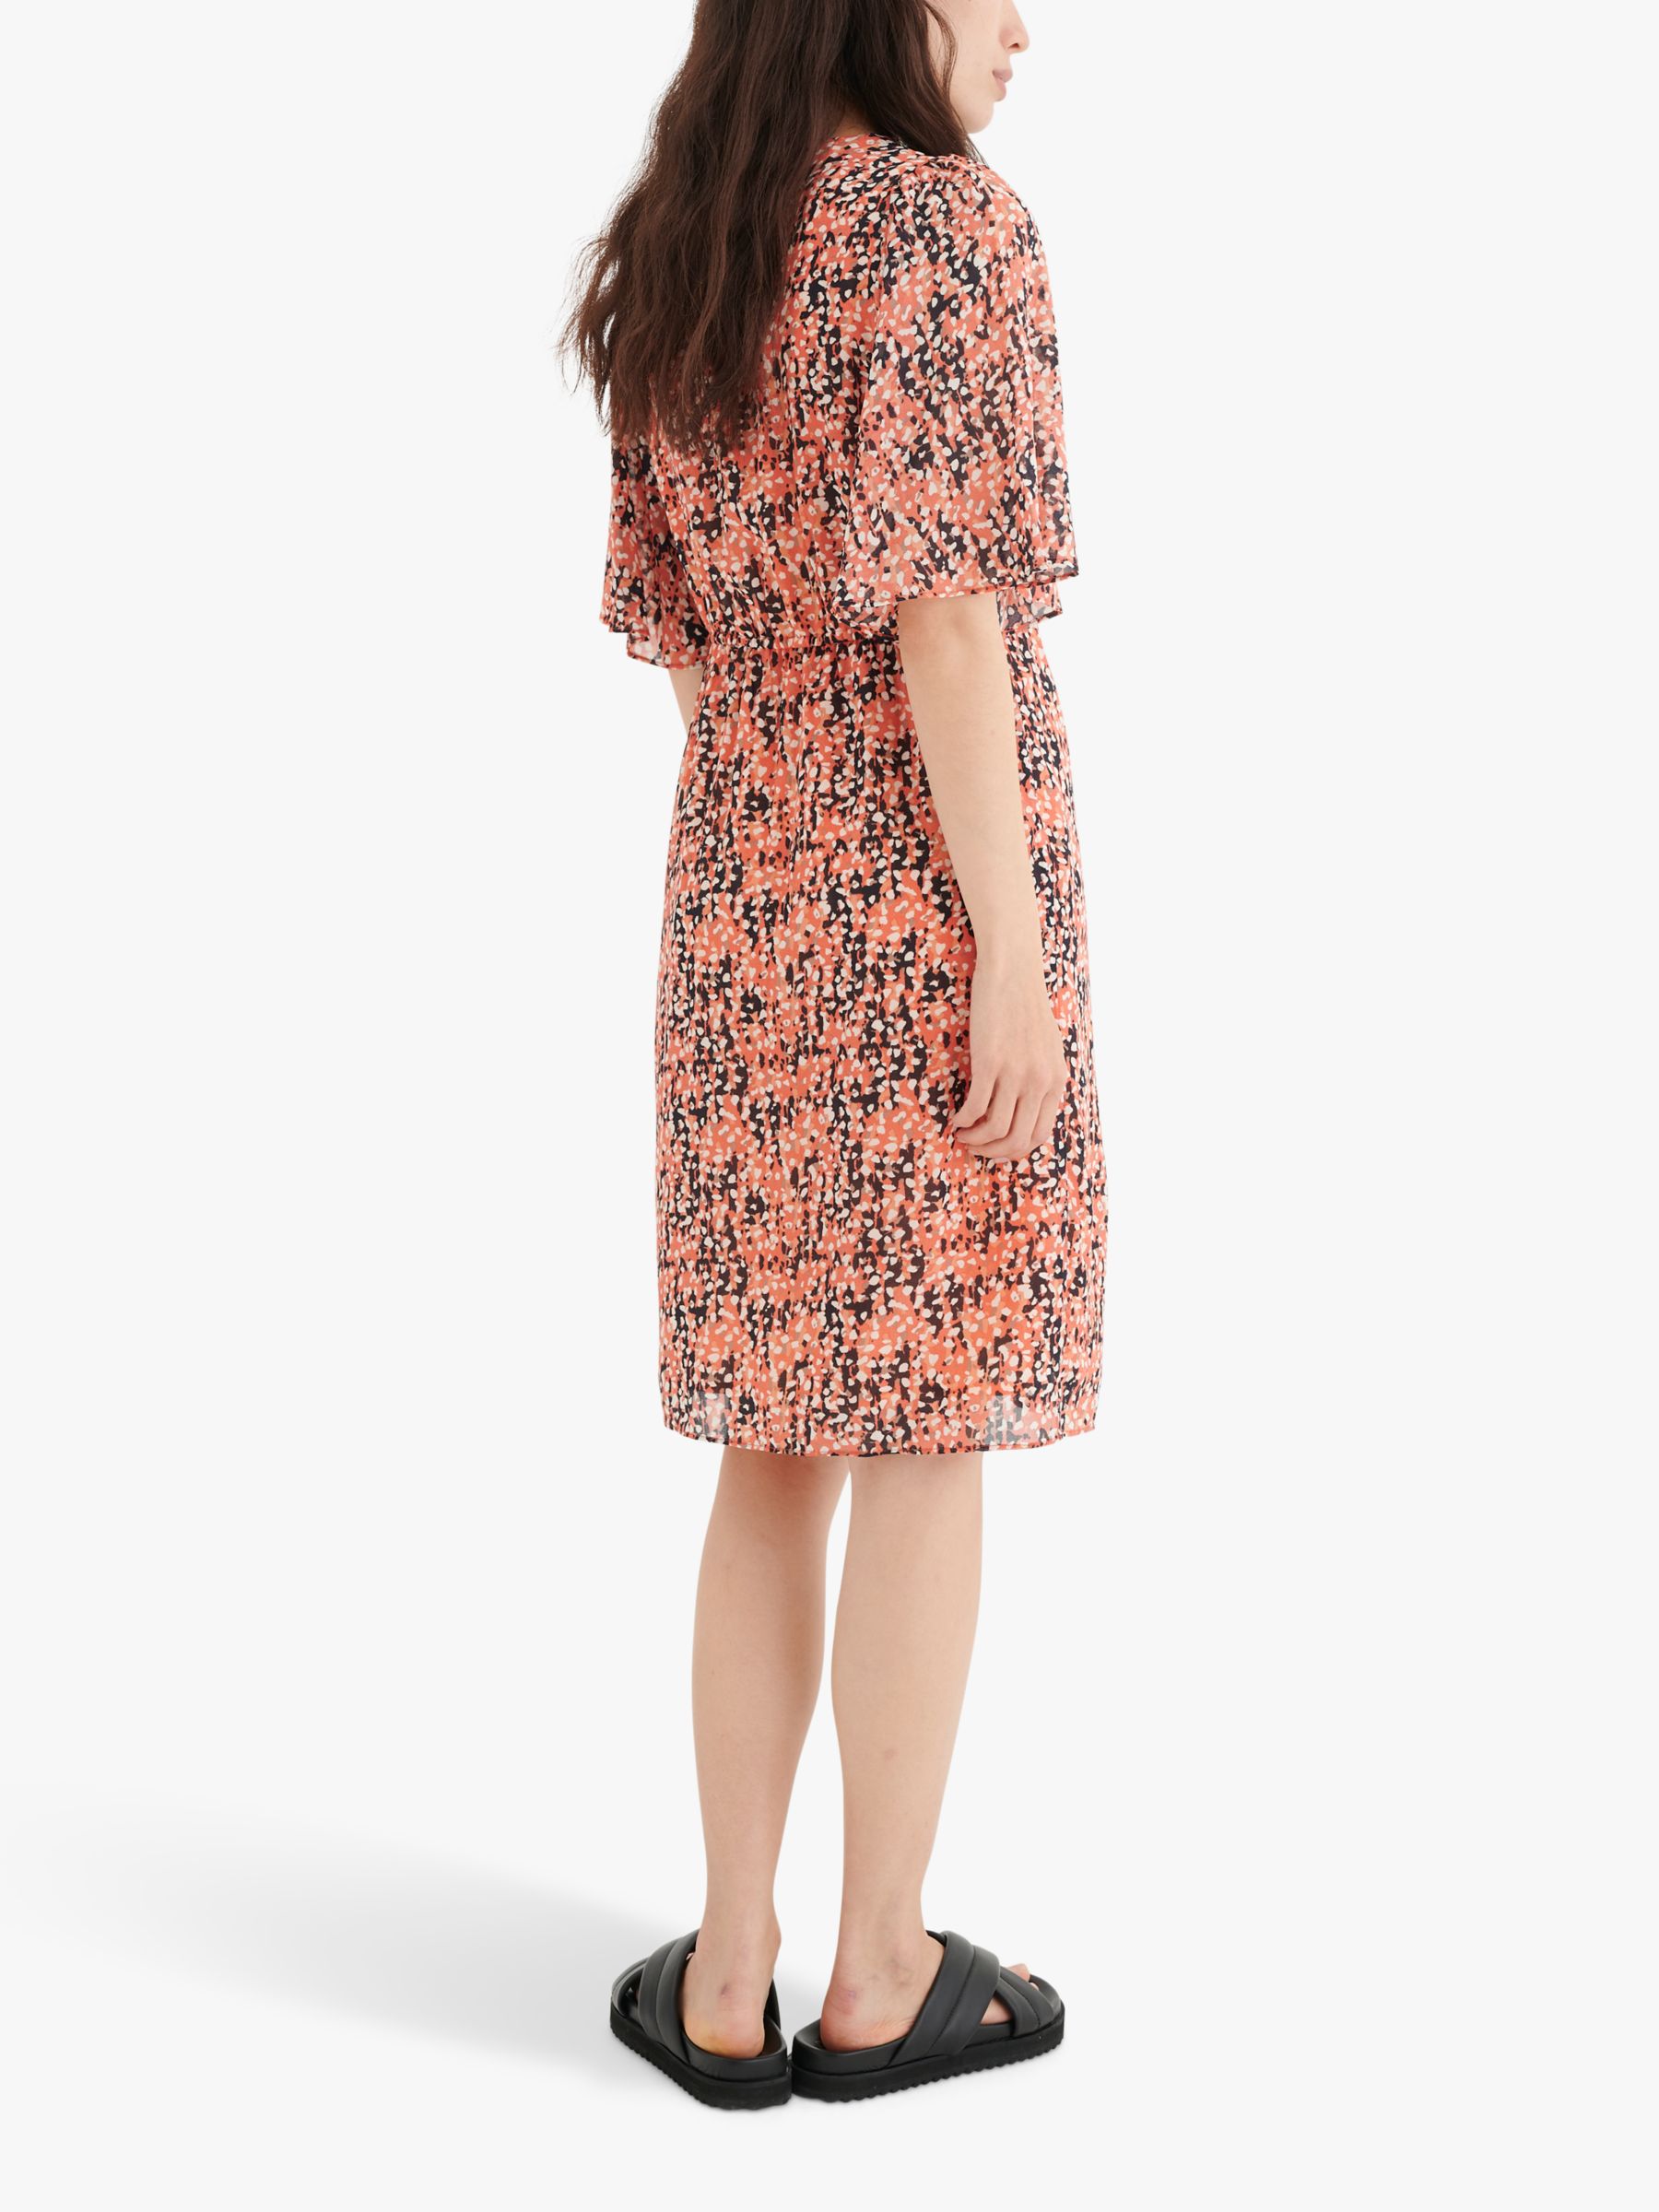 InWear Veree Abstract Print Dress, Coral/Multi, 8